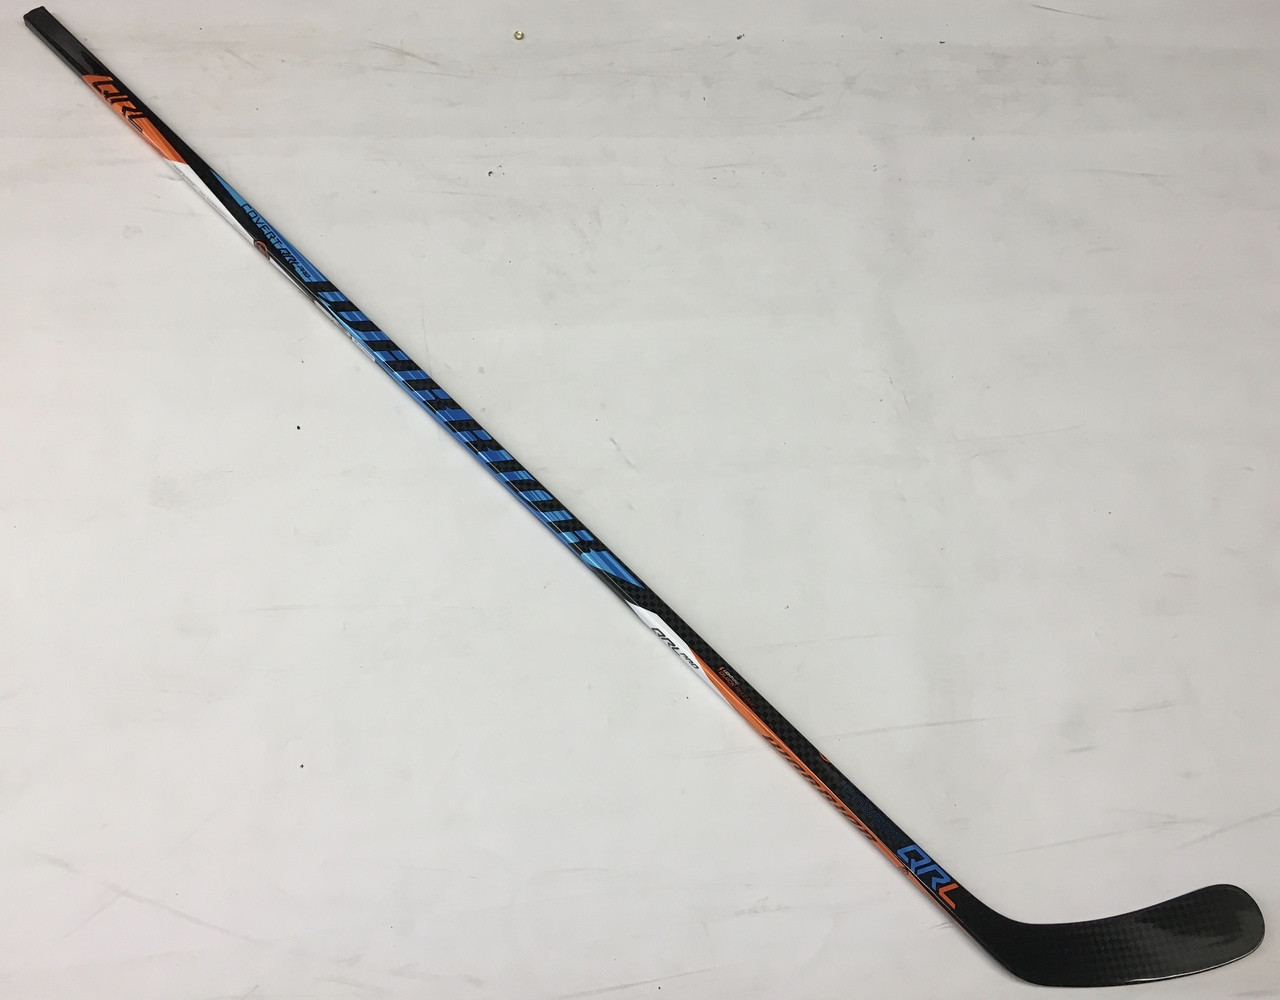 Details about   Warrior Covert QR Edge Grip Hockey Stick Senior Left Backstrom W03 Flex 85 